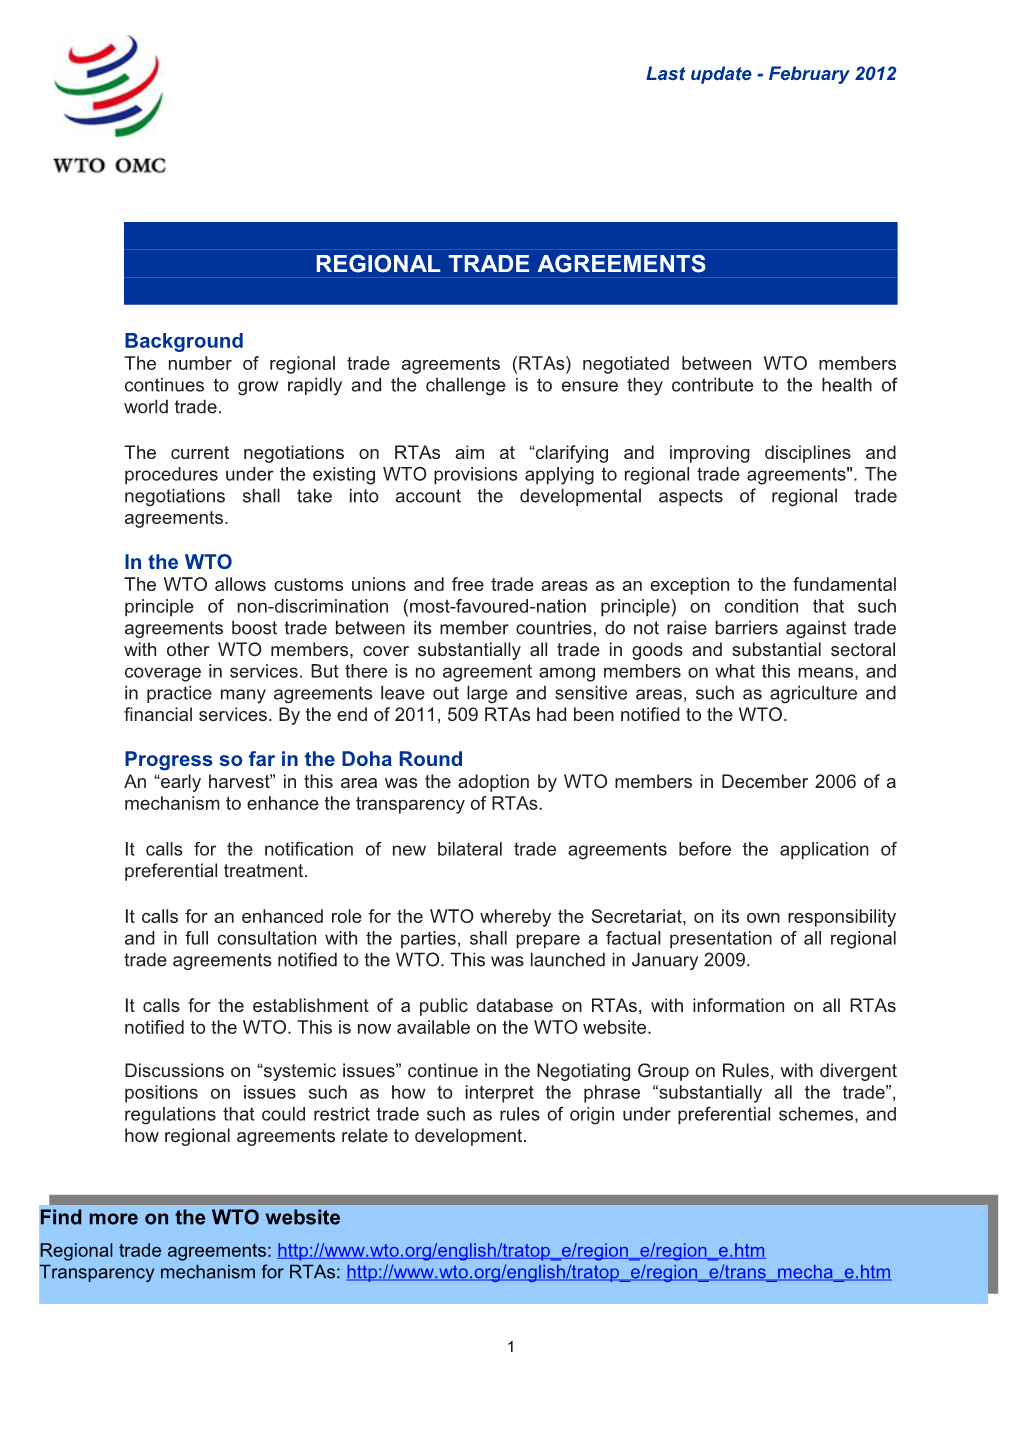 Regional Trade Agreements